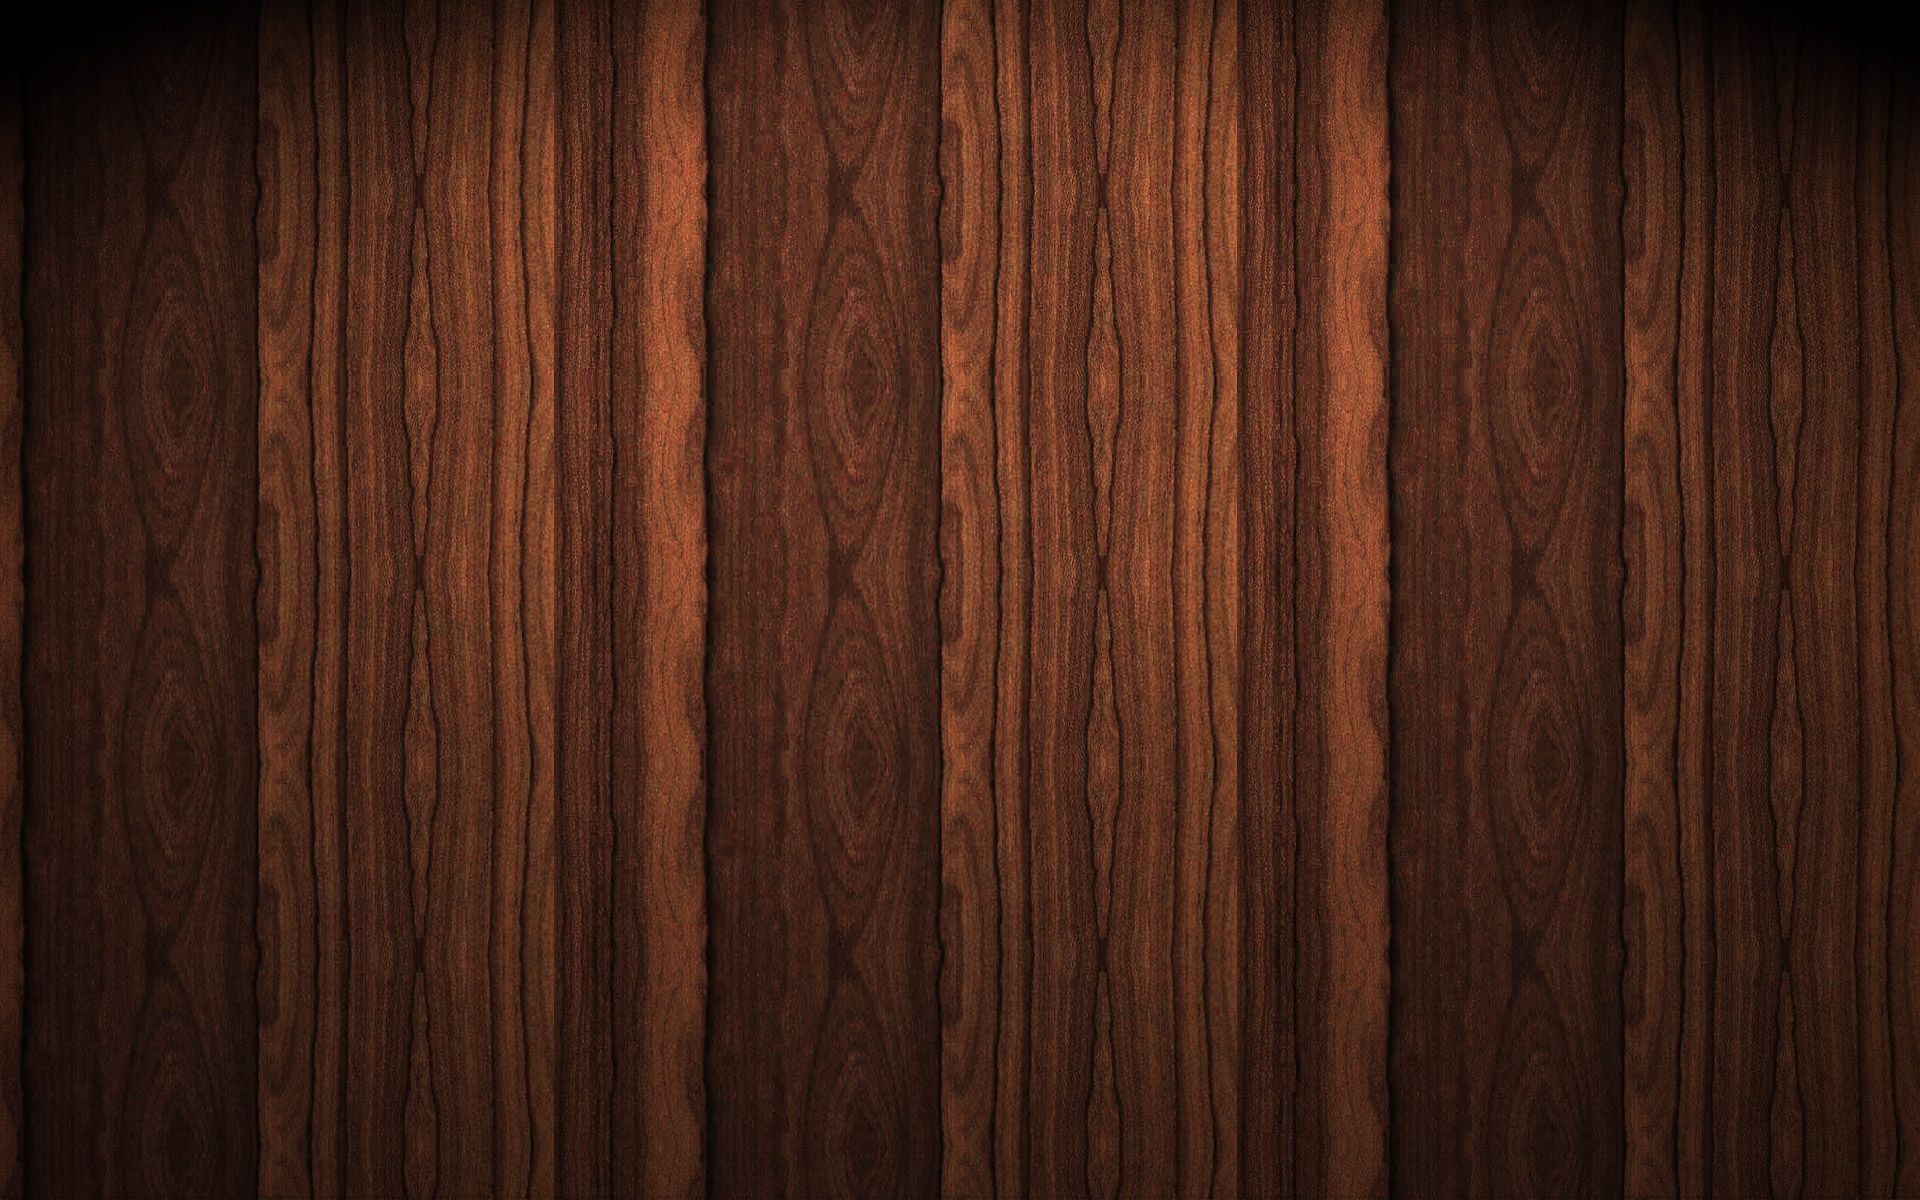 1920x1200 Wood texture abstract hd wallpaper  5488. Wood Wallpaper Hd 43  WujinSHike com